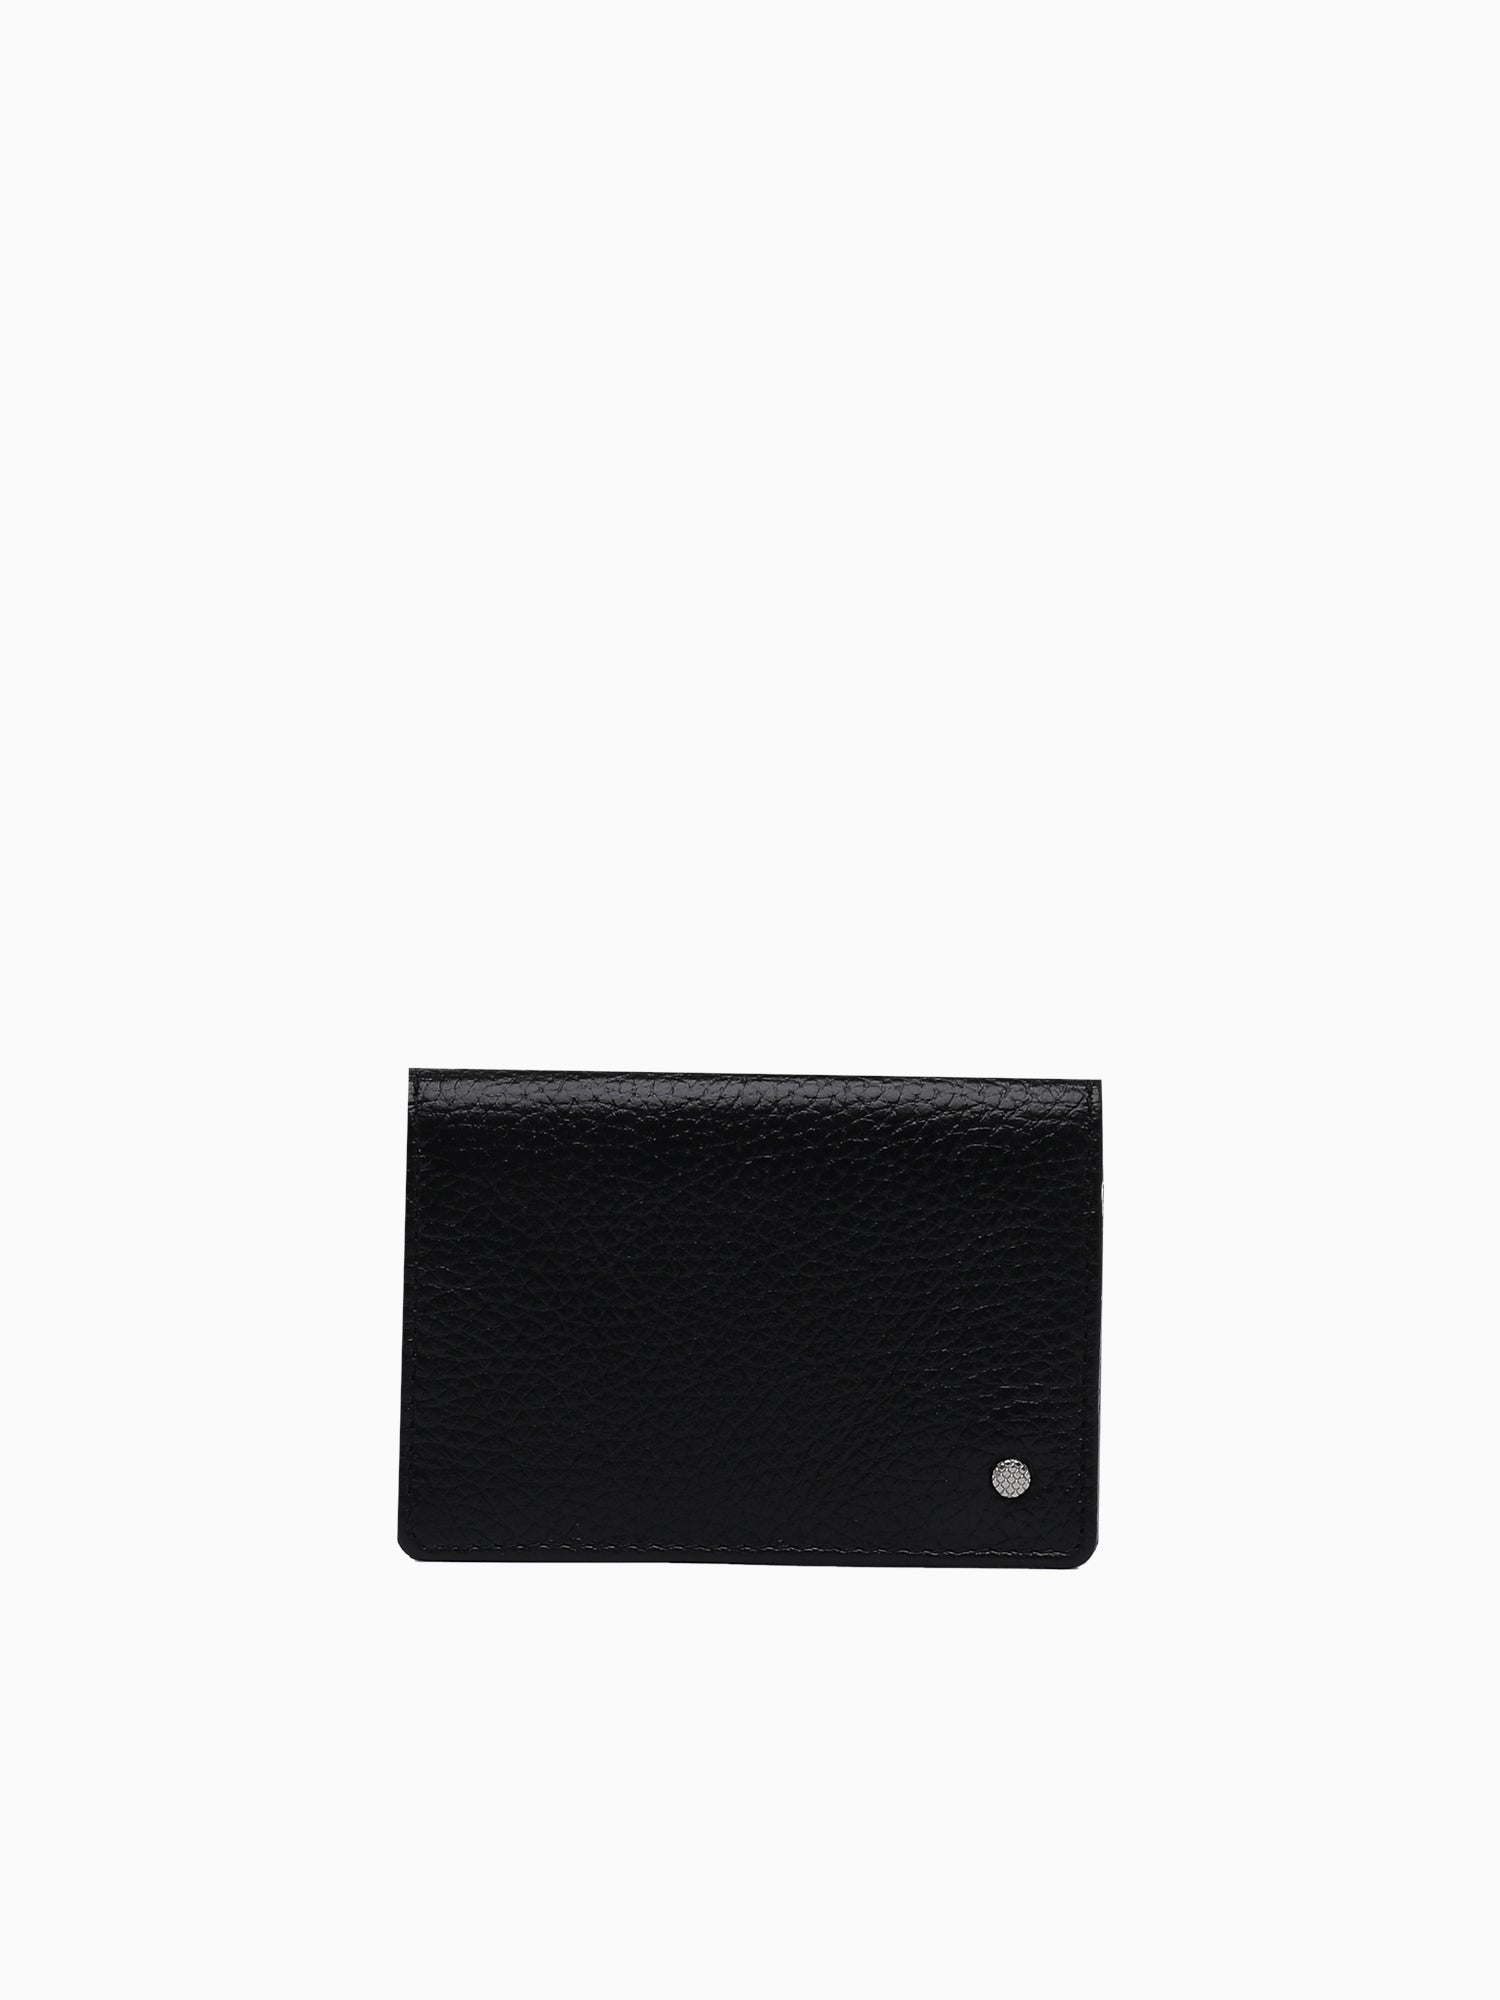 U Wallet U35jfc black leather Black